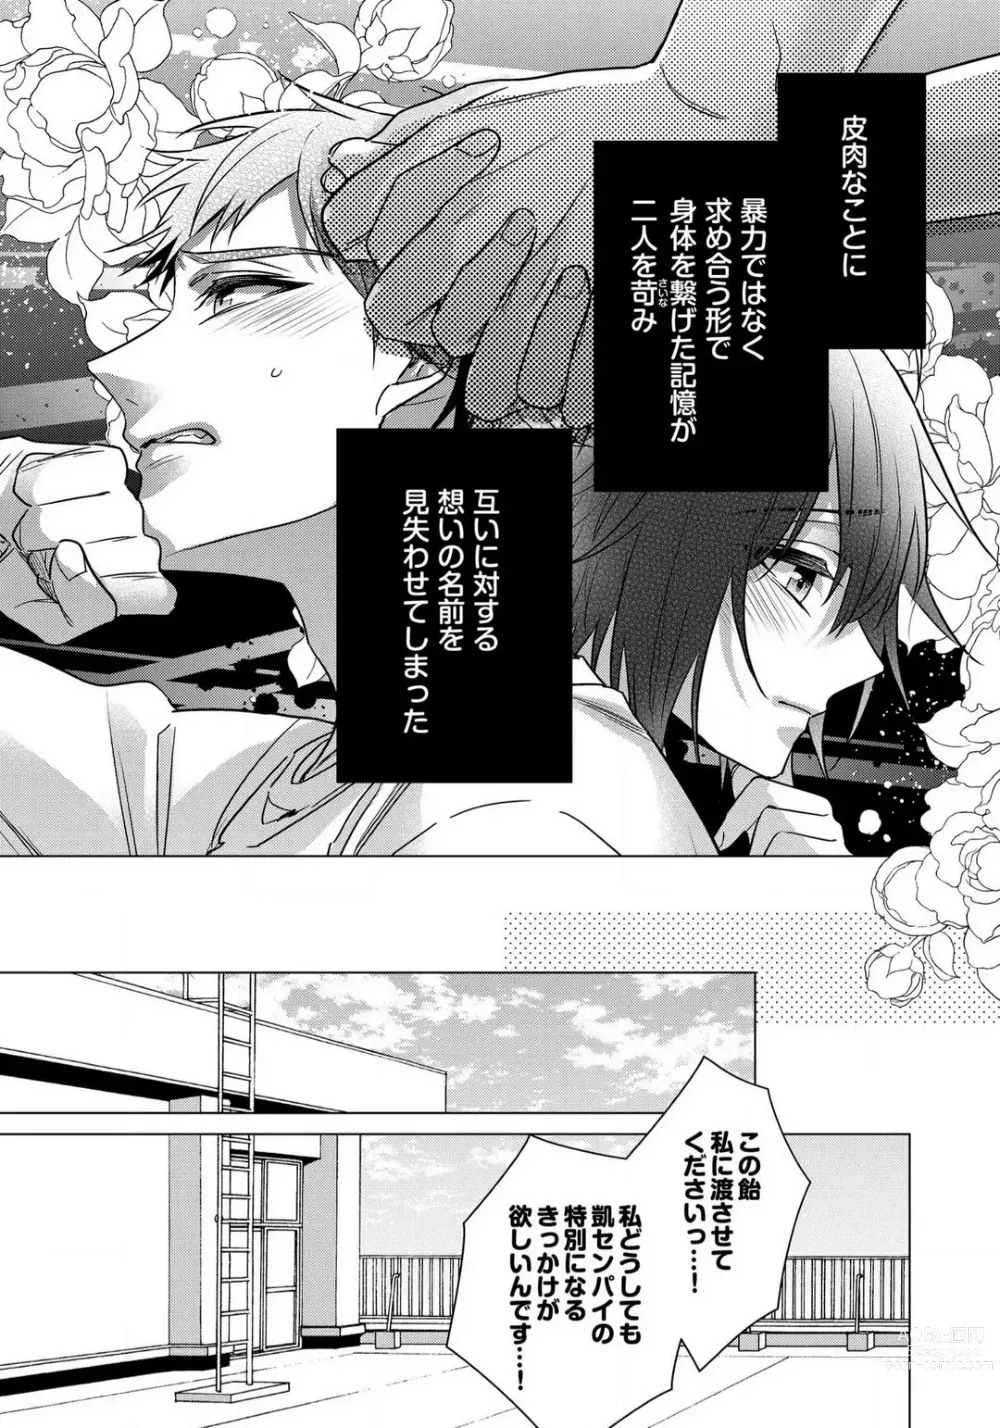 Page 55 of manga Ijimerare - Onna